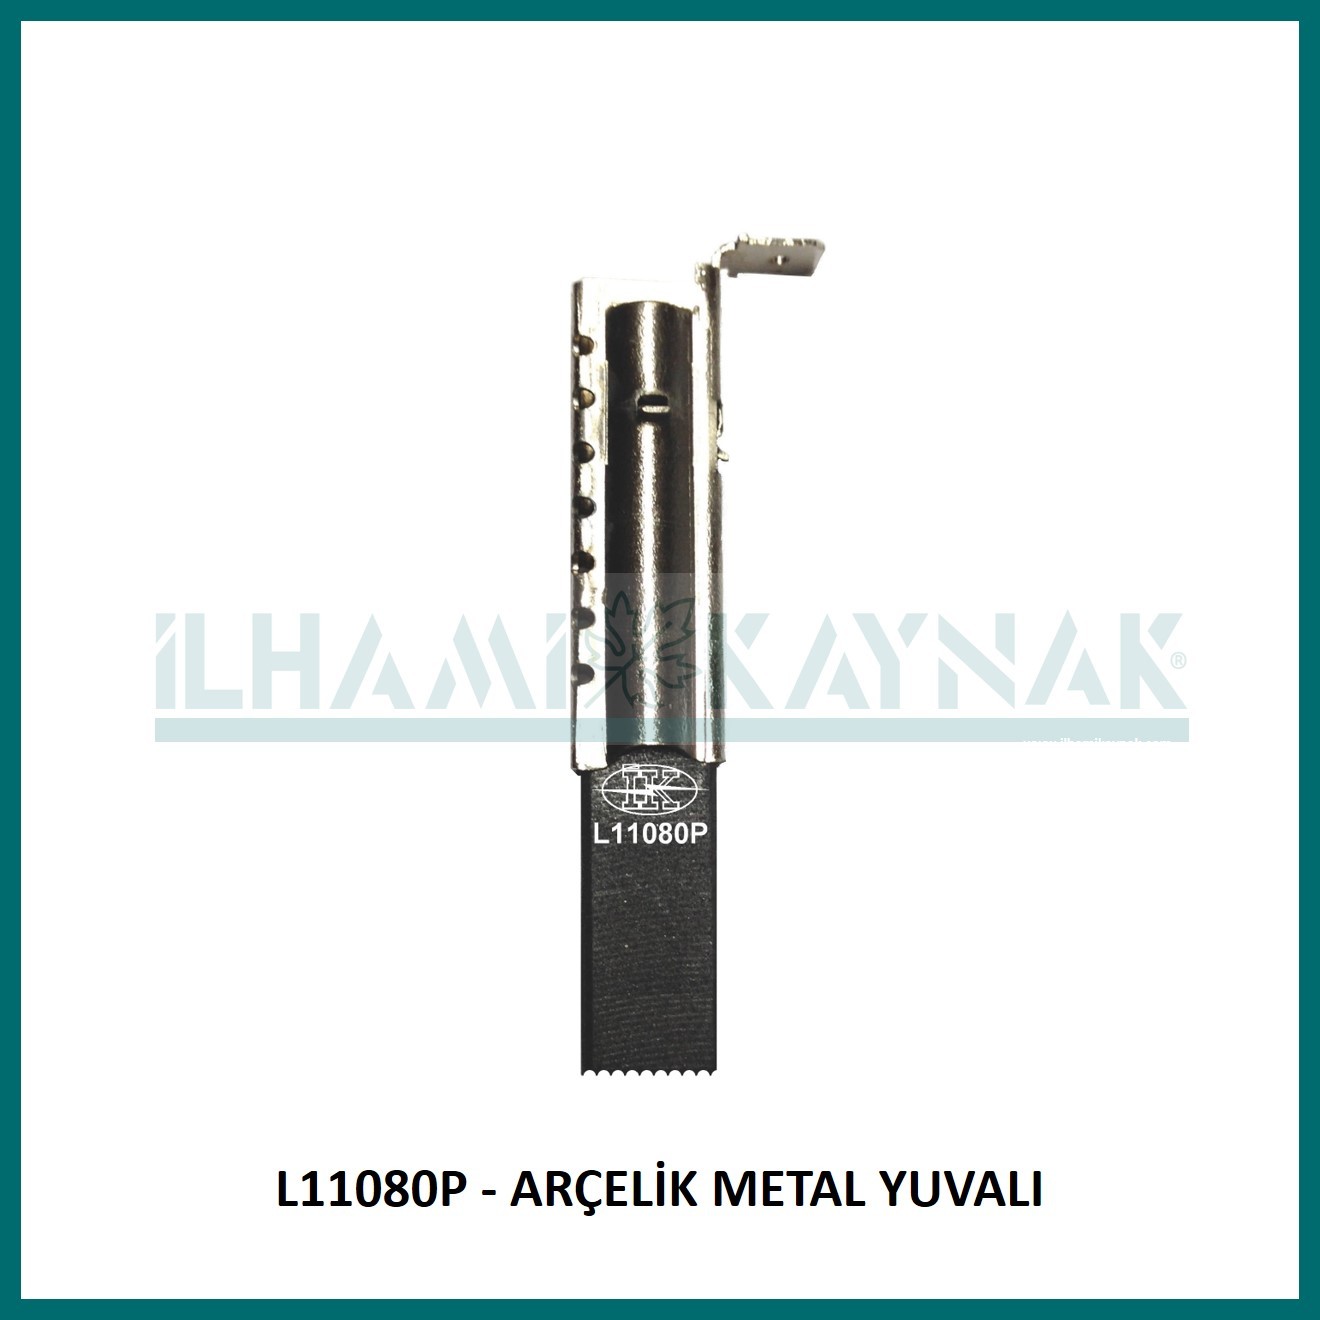 L11080P - ARÇELİK METAL YUVALI -  5*12.5*32 mm - Minimum Satın Alım: 10 Adet